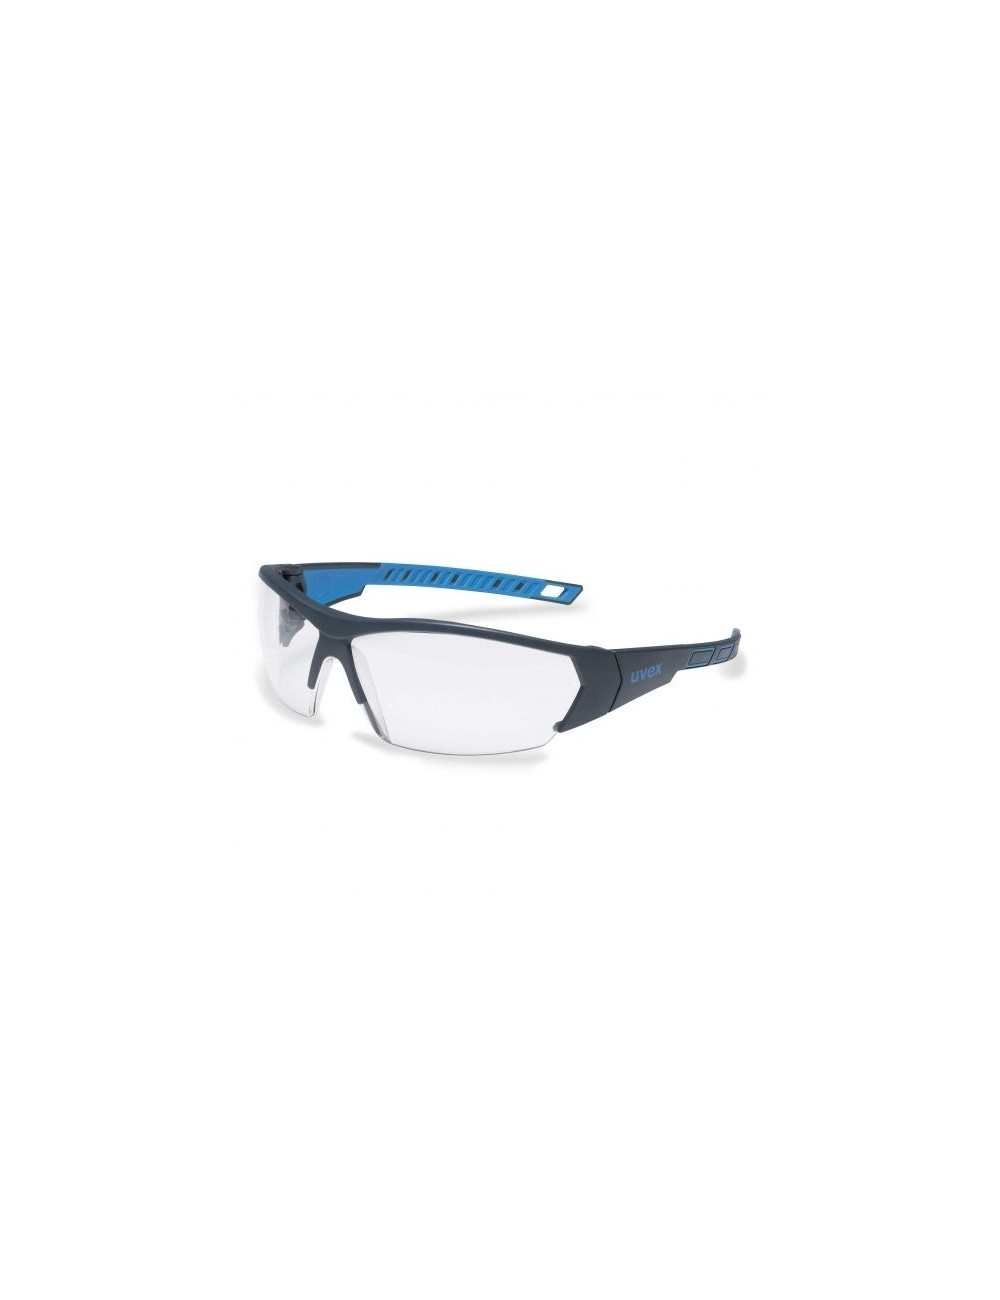 Uvex I-Works safety glasses